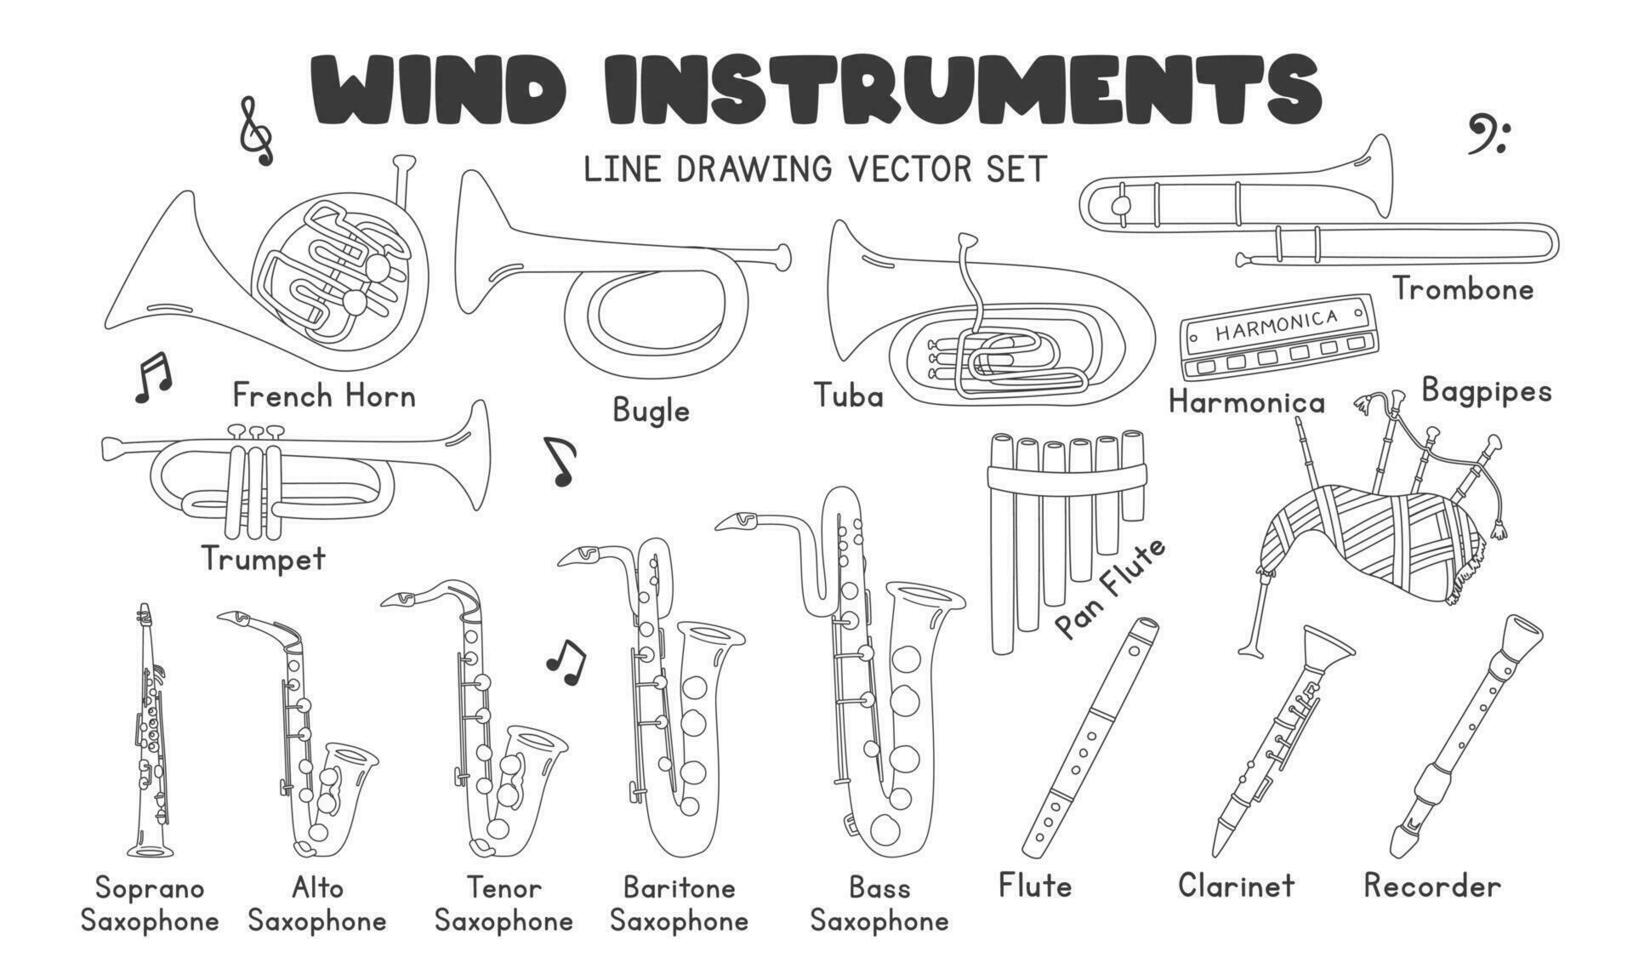 musical viento instrumentos línea dibujo vector colocar. trompeta, saxofón, pan flauta, gaita clipart dibujos animados estilo, línea Arte mano dibujado estilo